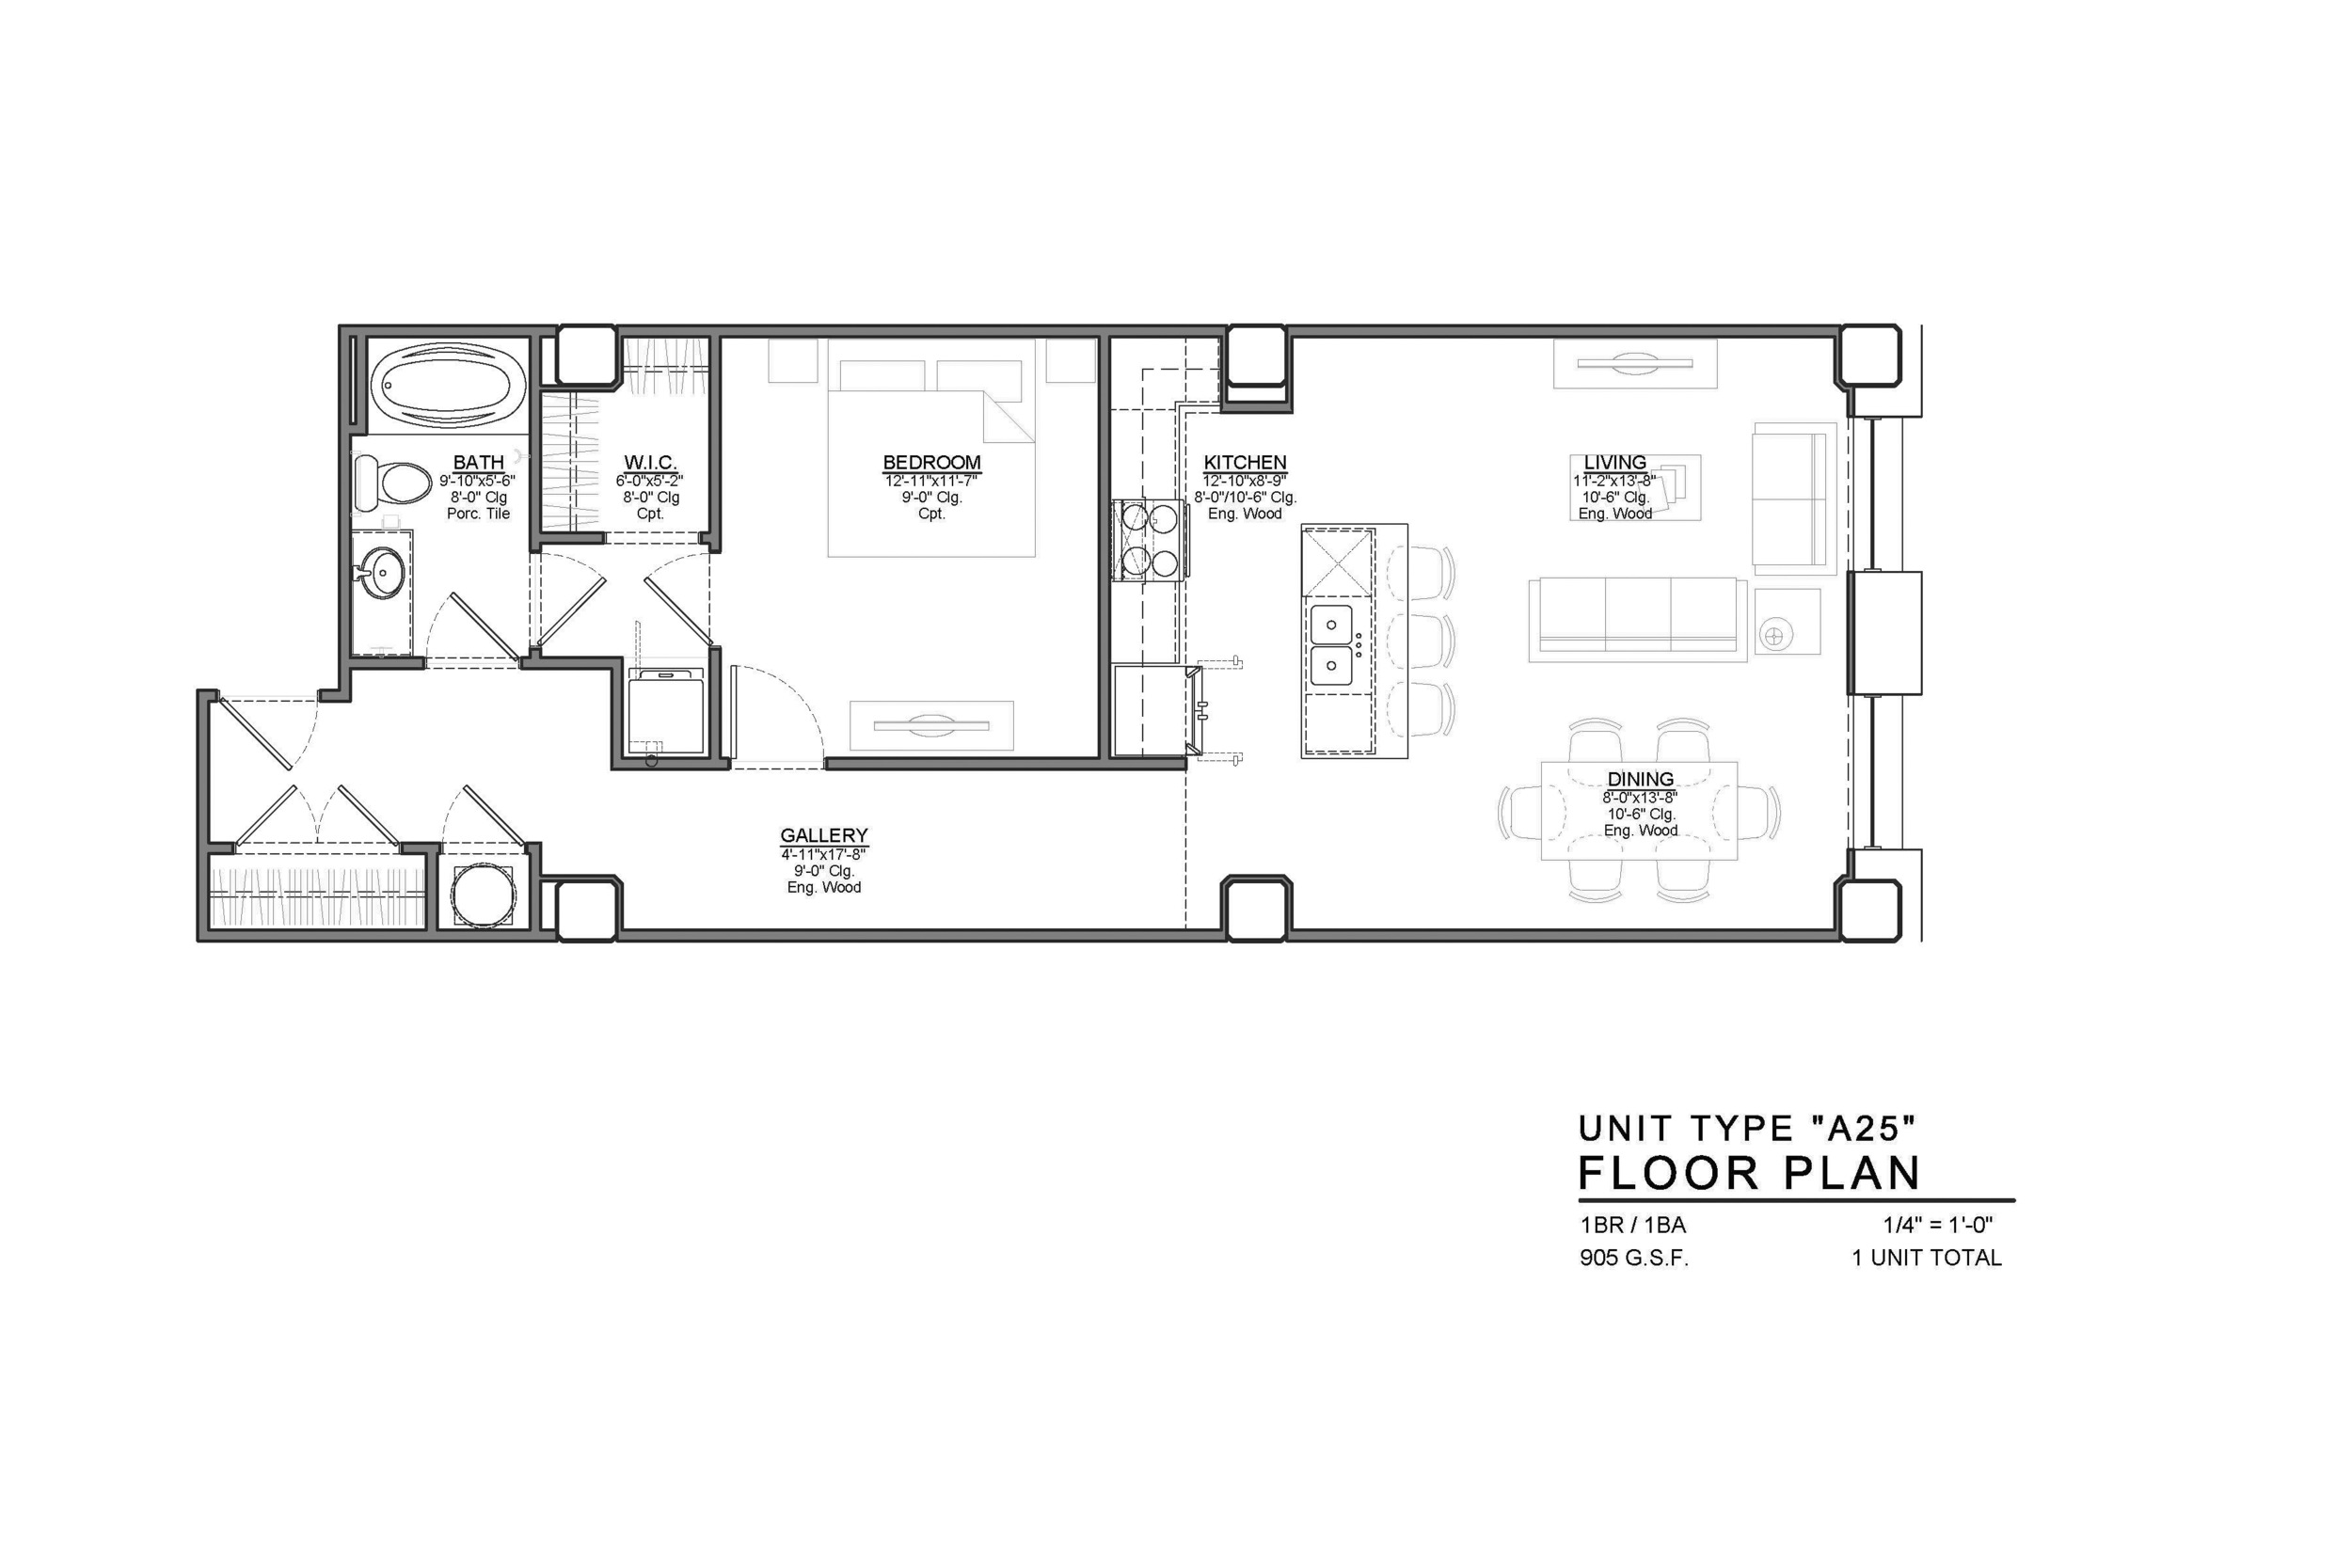 A25 FLOOR PLAN: 1 BEDROOM / 1 BATH